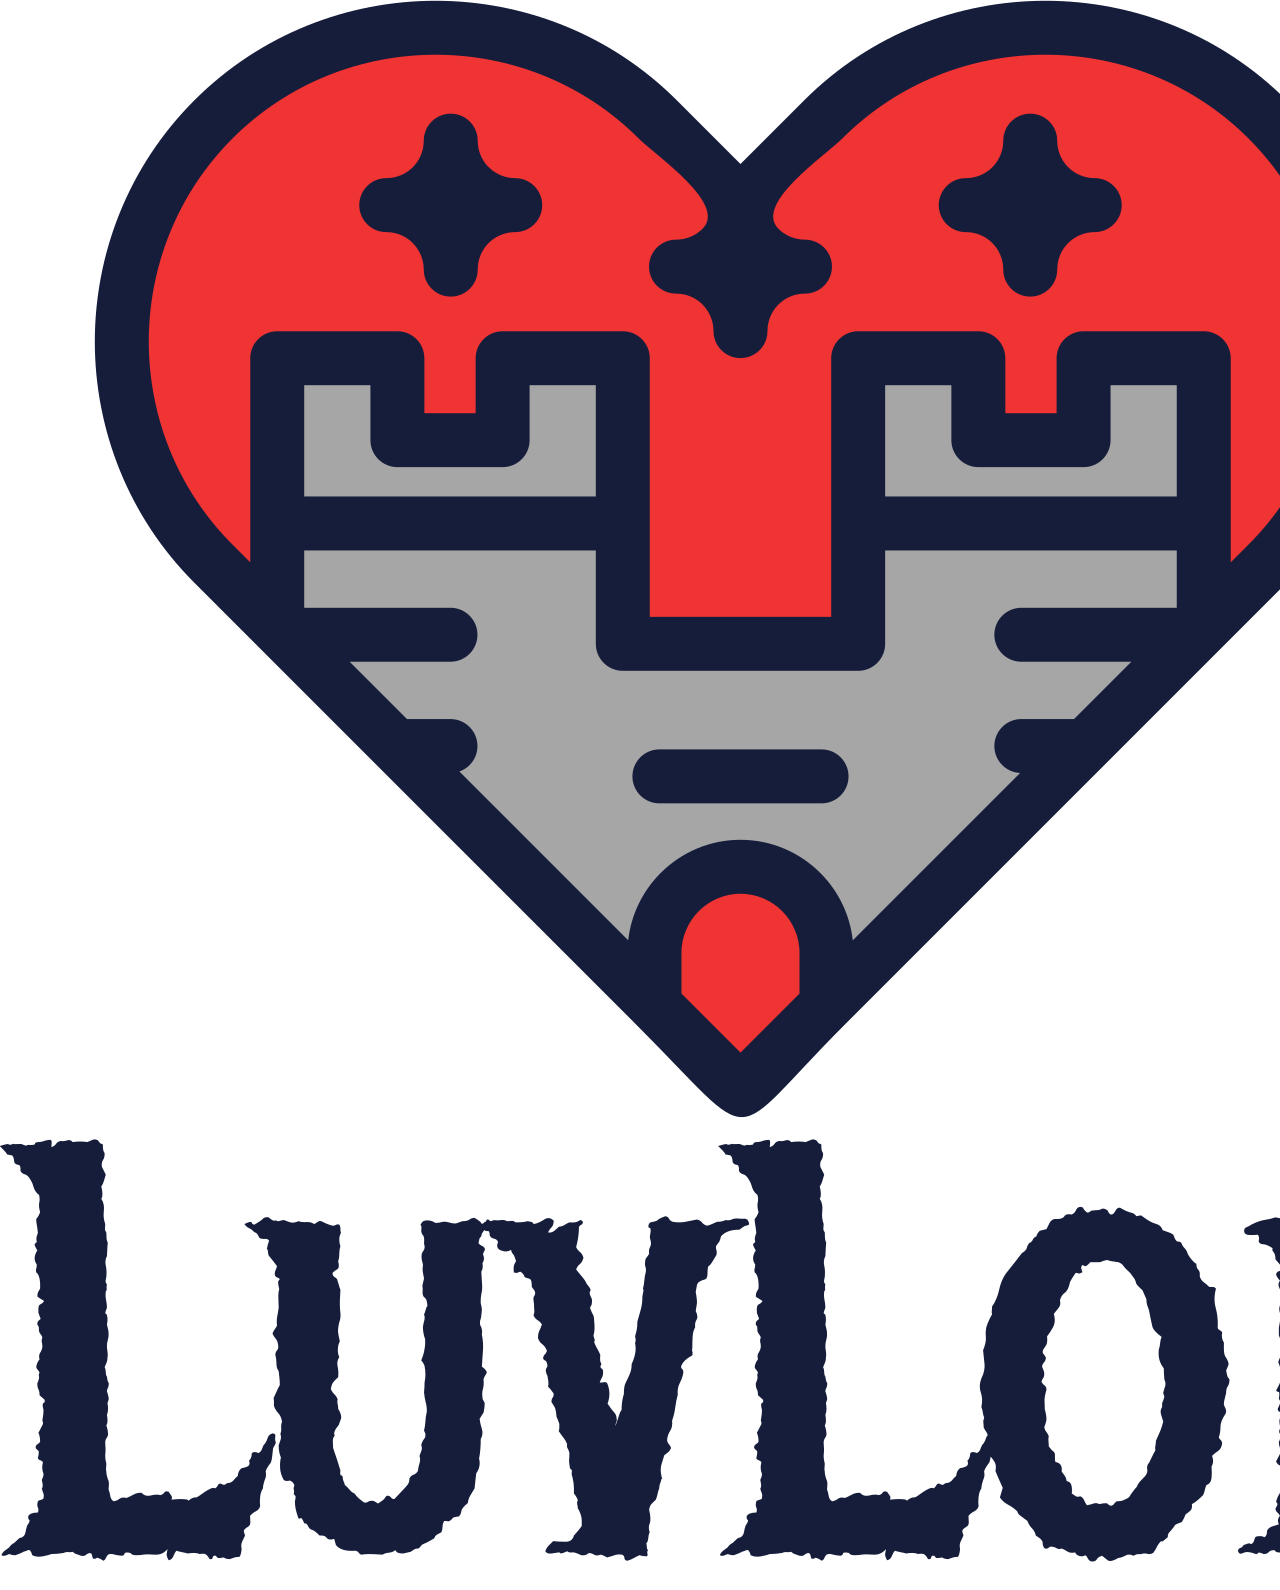 LuvLok's logo